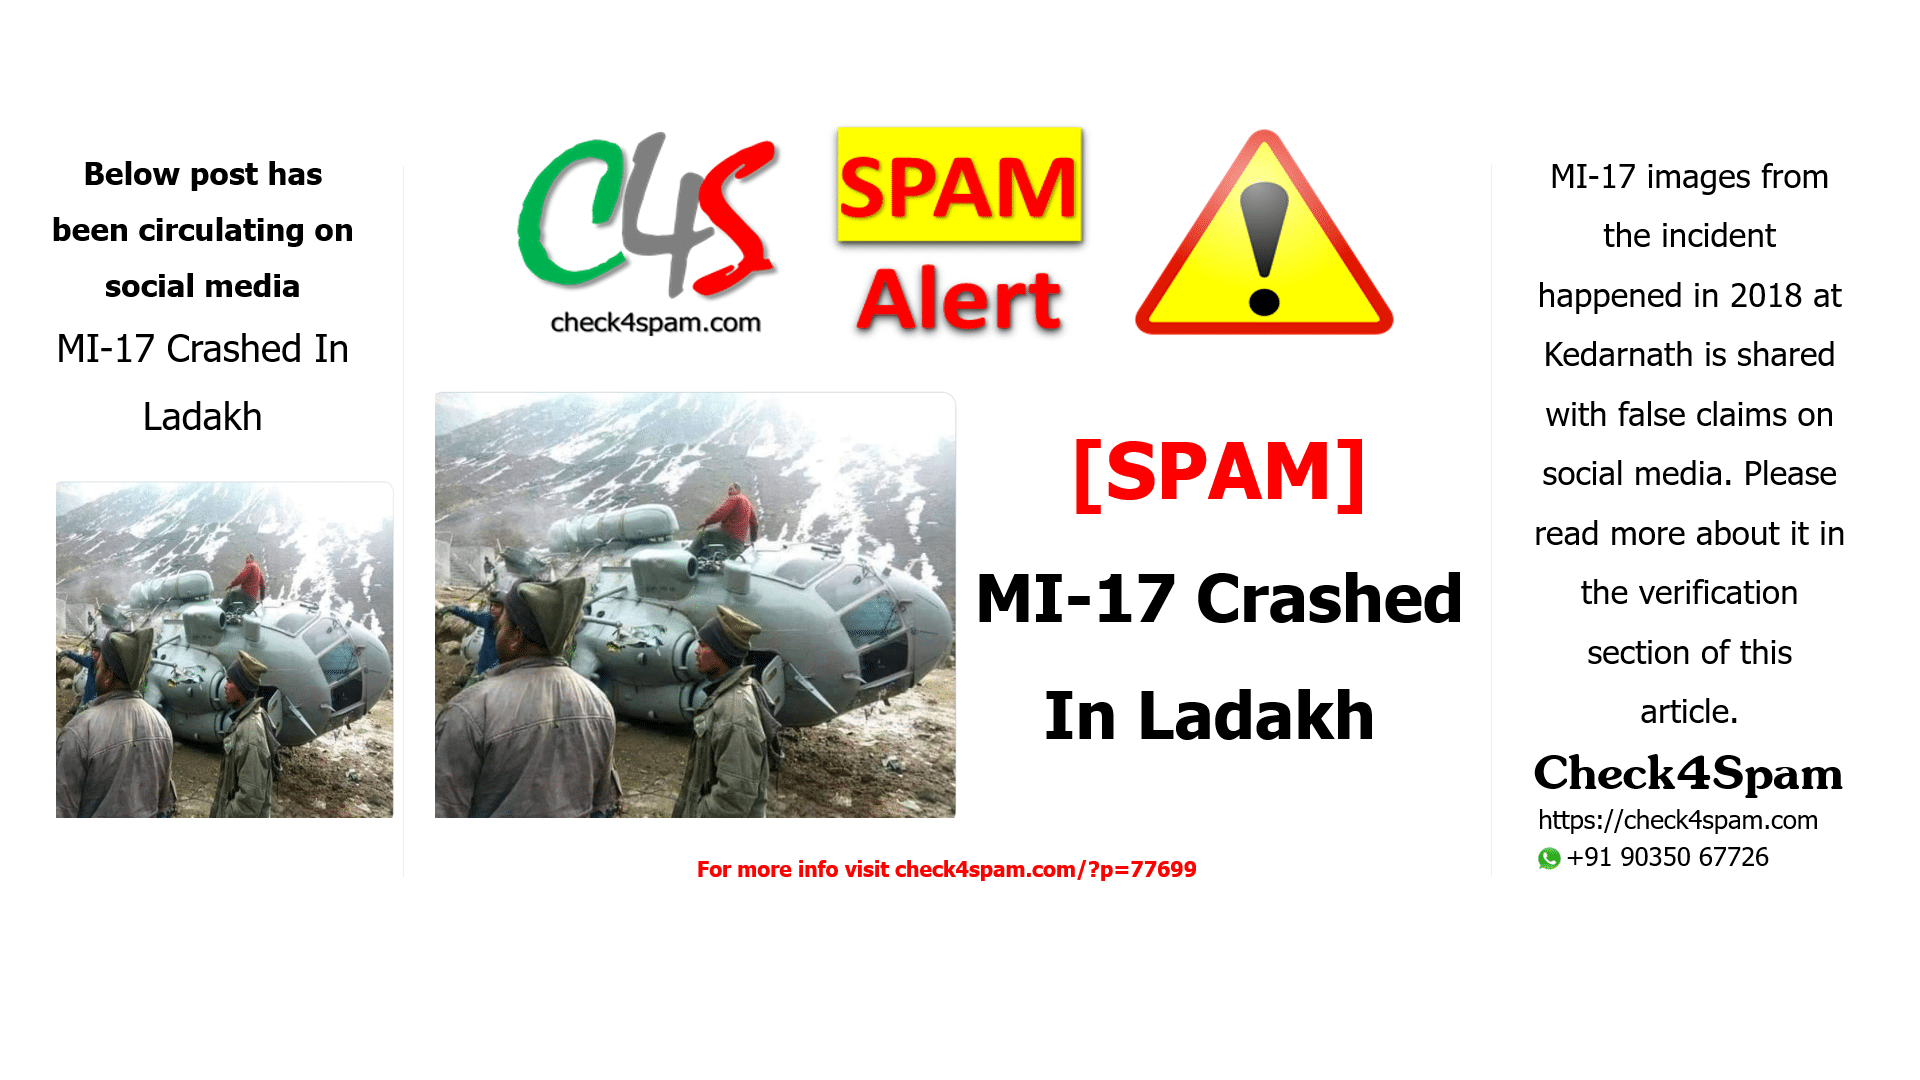 MI-17 Crashed In Ladakh